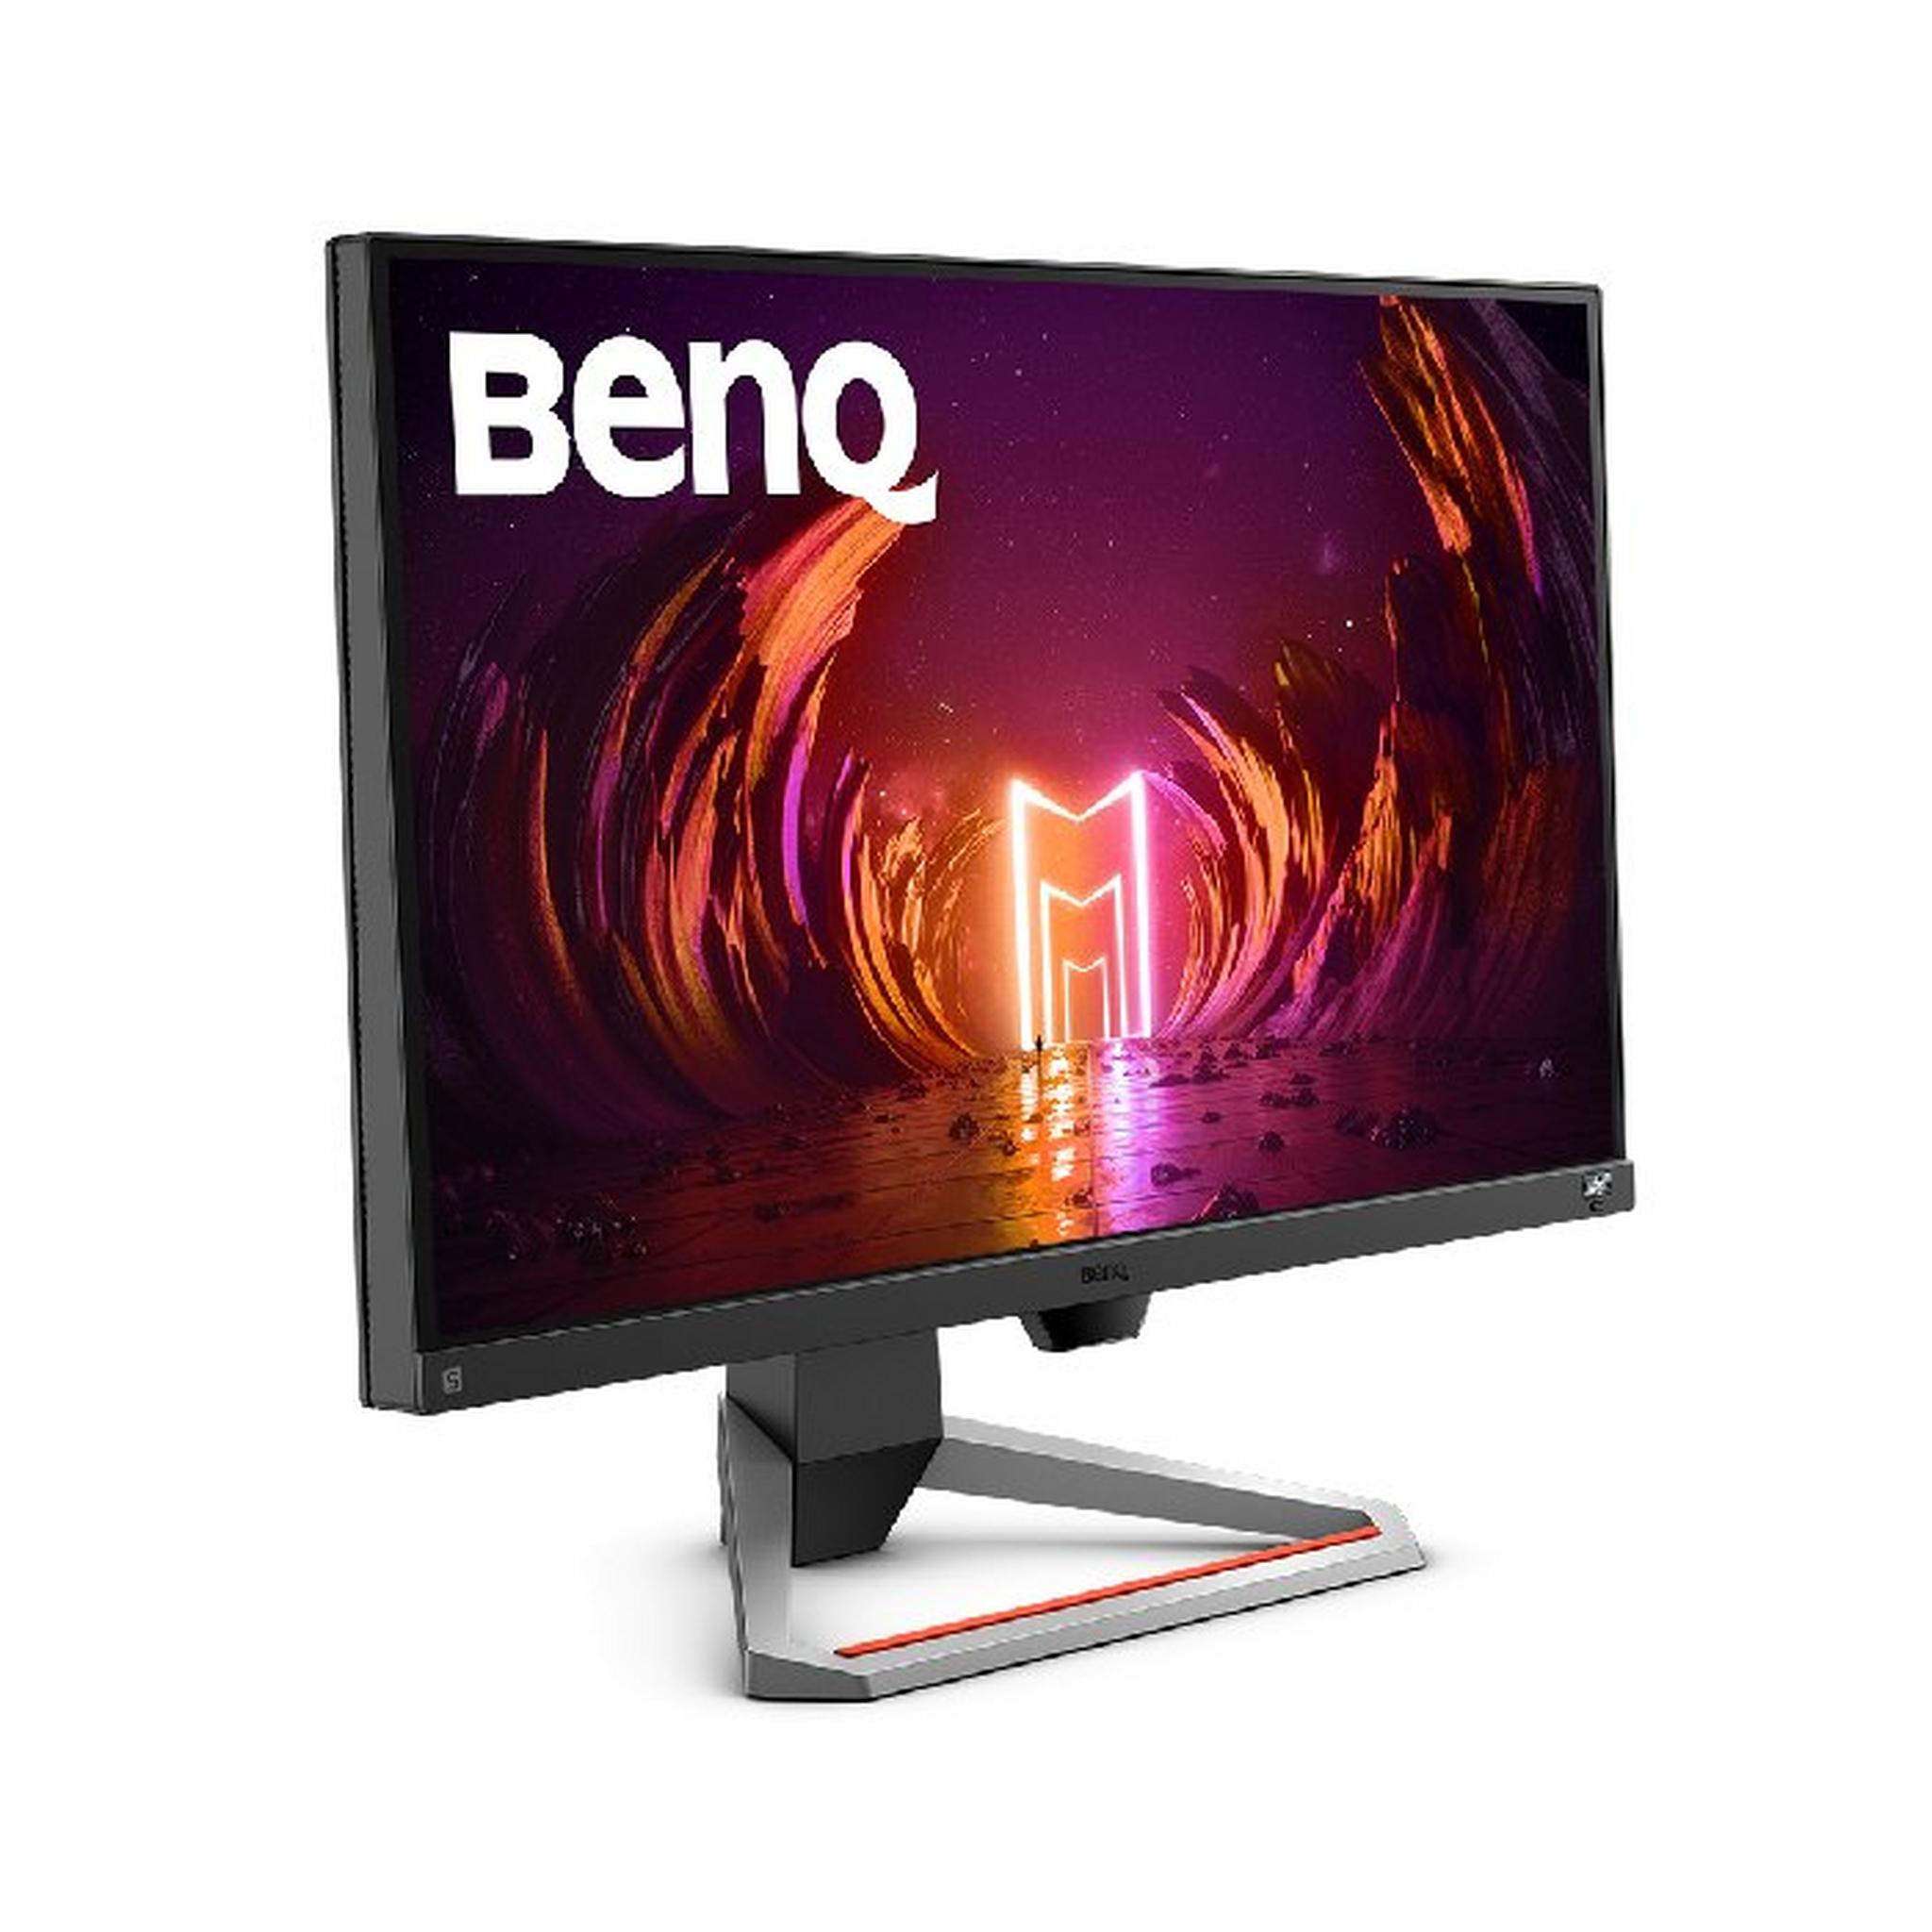 BenQ Mobiuz Gaming Computer Monitor, 27 Inch,1920x1080 Full HD, EX2710S - Black